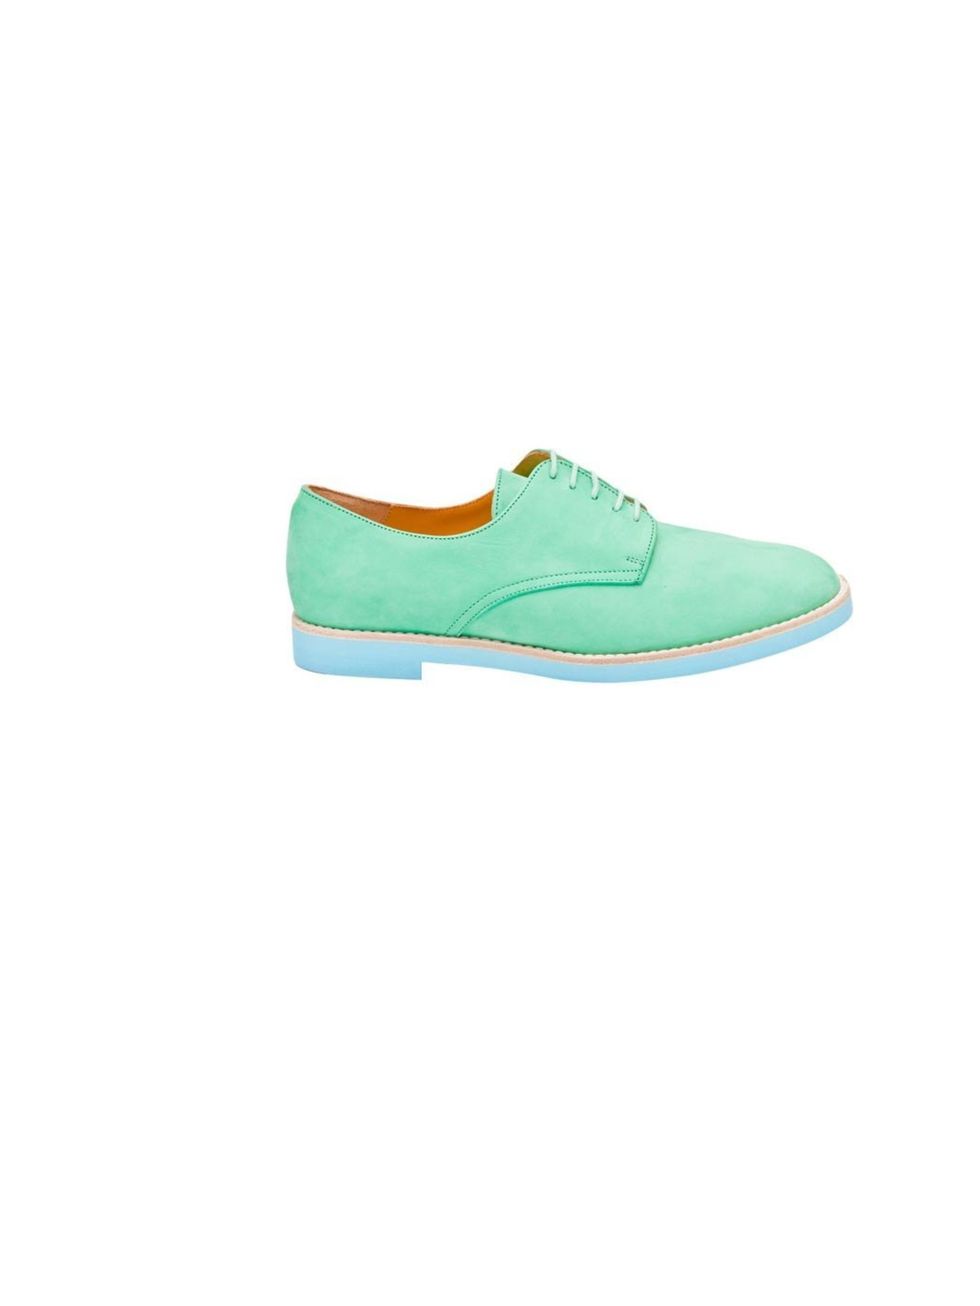 <p>T &amp; F Slack Shoemakers London, £234, at <a href="http://www.farfetch.com/shopping/women/t-f-slack-shoemakers-london-colored-oxford-shoe-item-10123729.aspx">Farfetch</a></p>